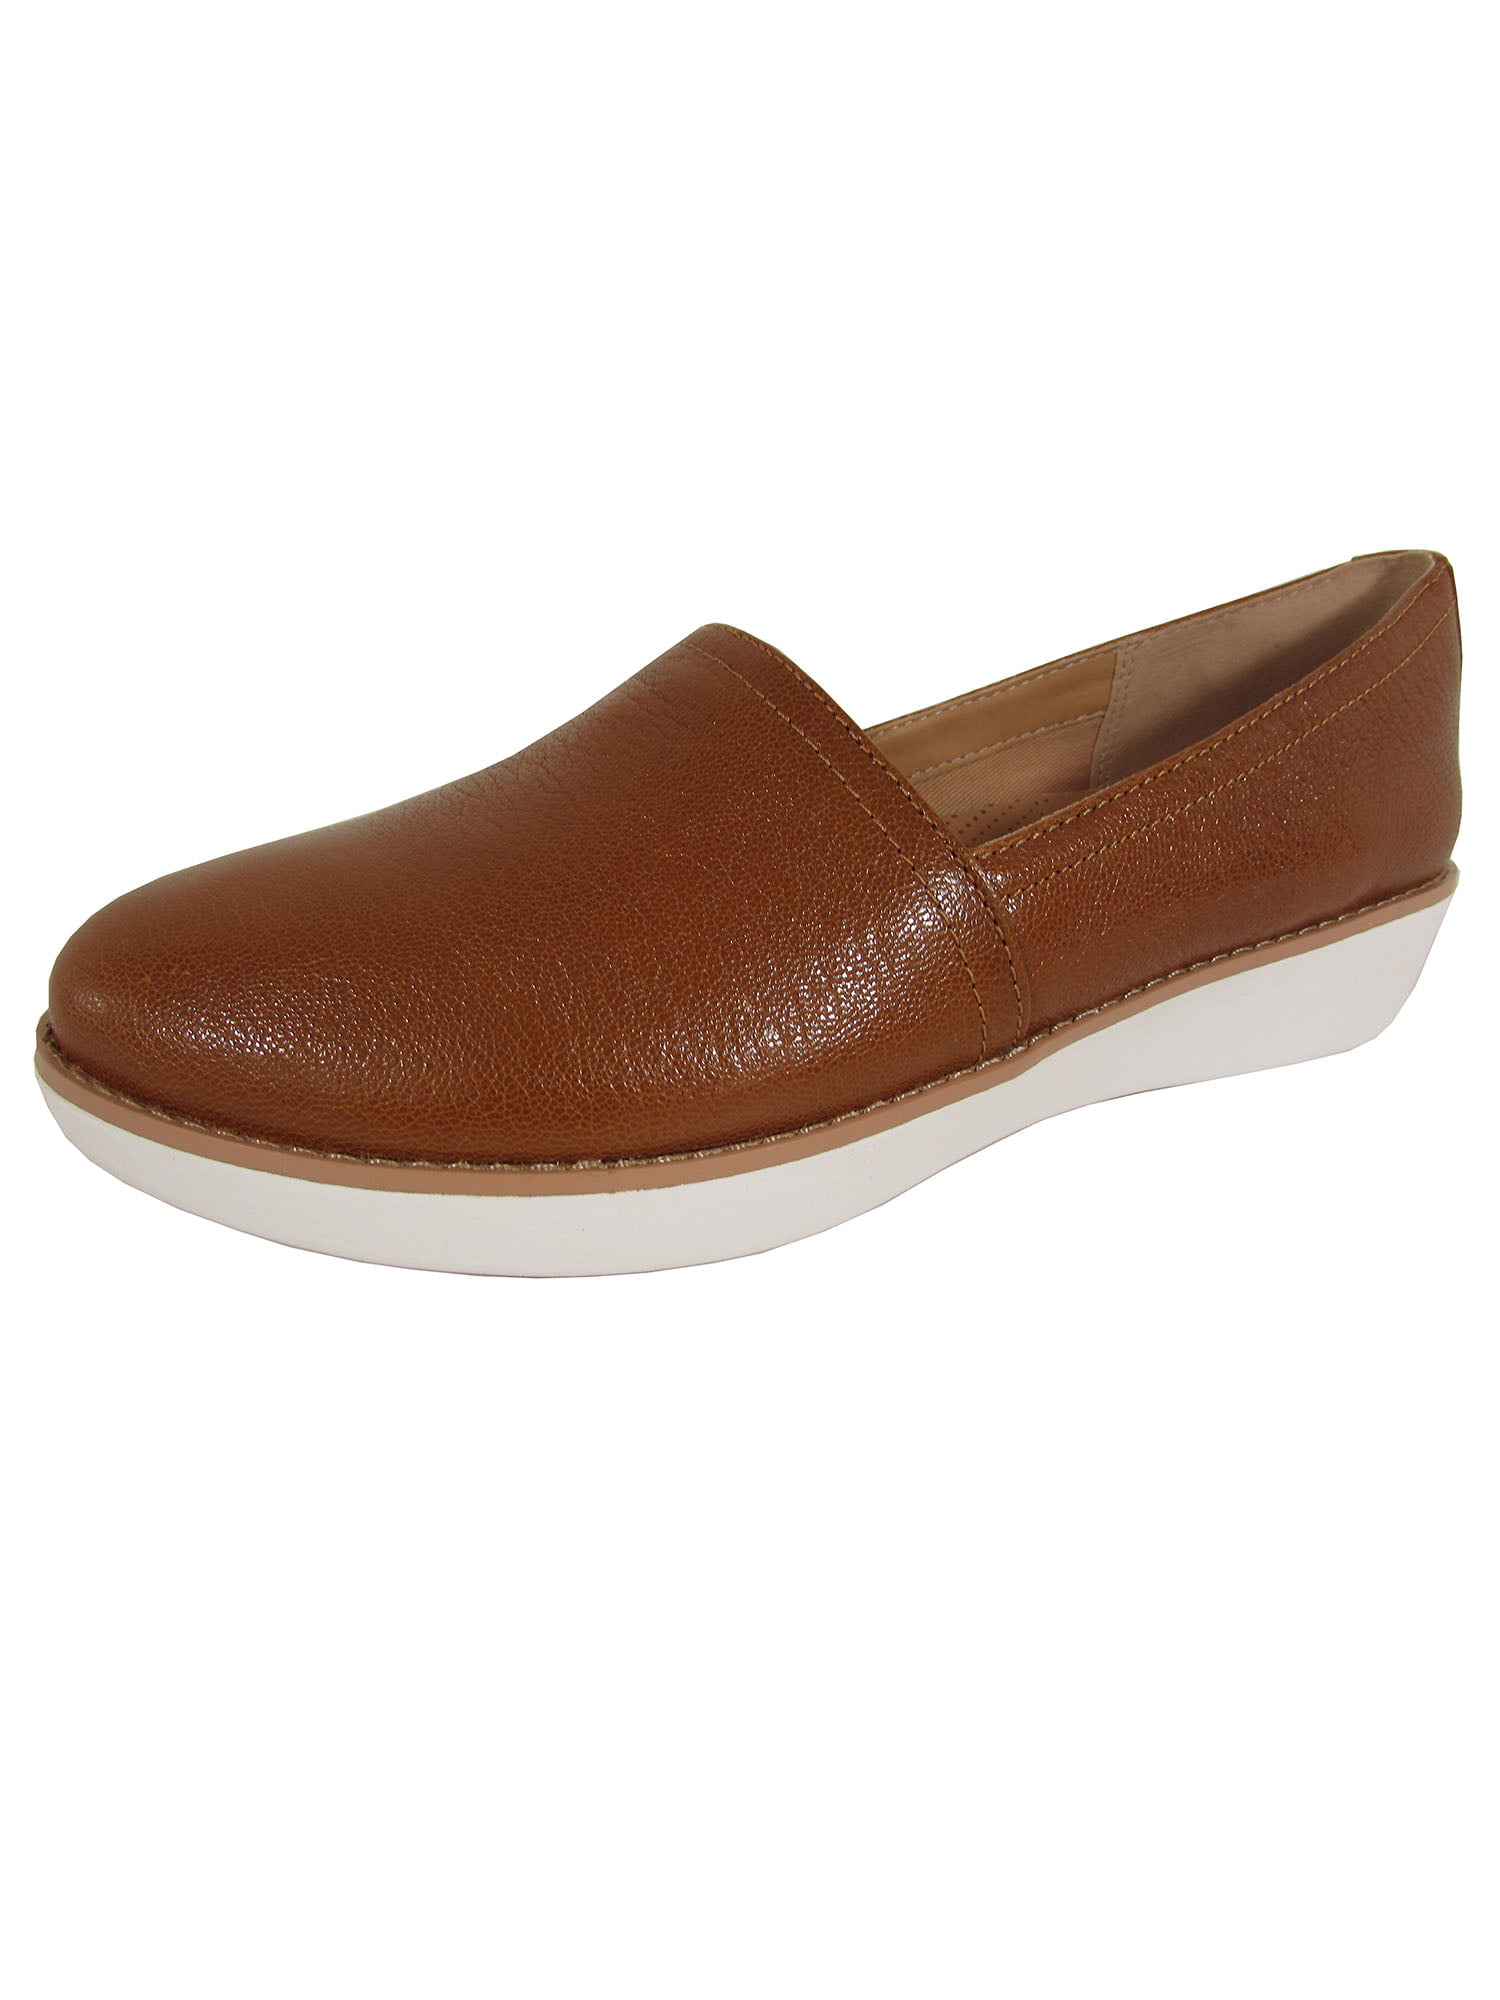 Fitflop Womens Casa Slip Shoes, Tumbled Tan, US 8 -